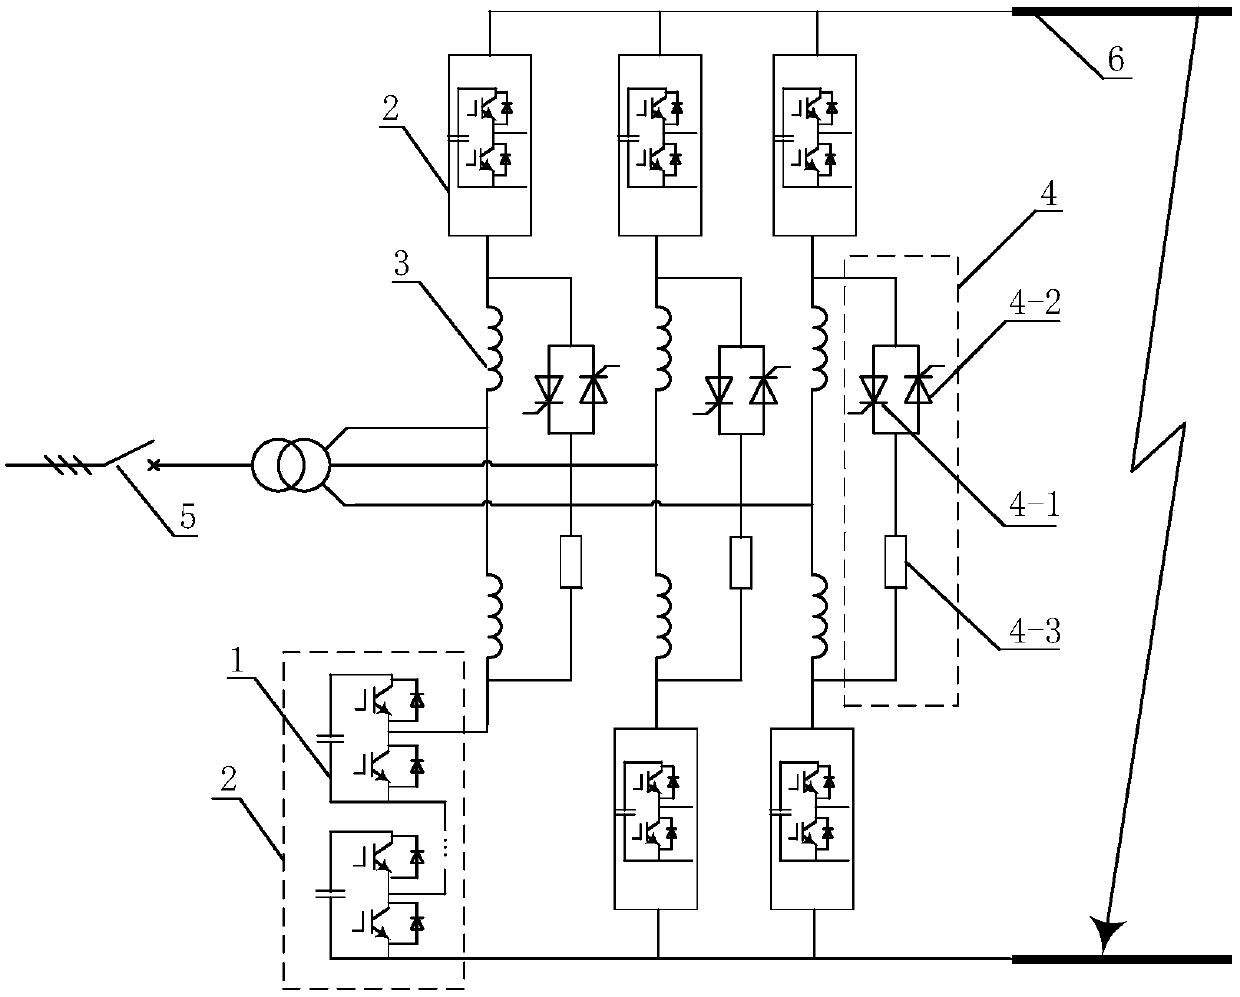 Modular multi-level converter bridge arm bypass protection circuit against DC short circuit fault